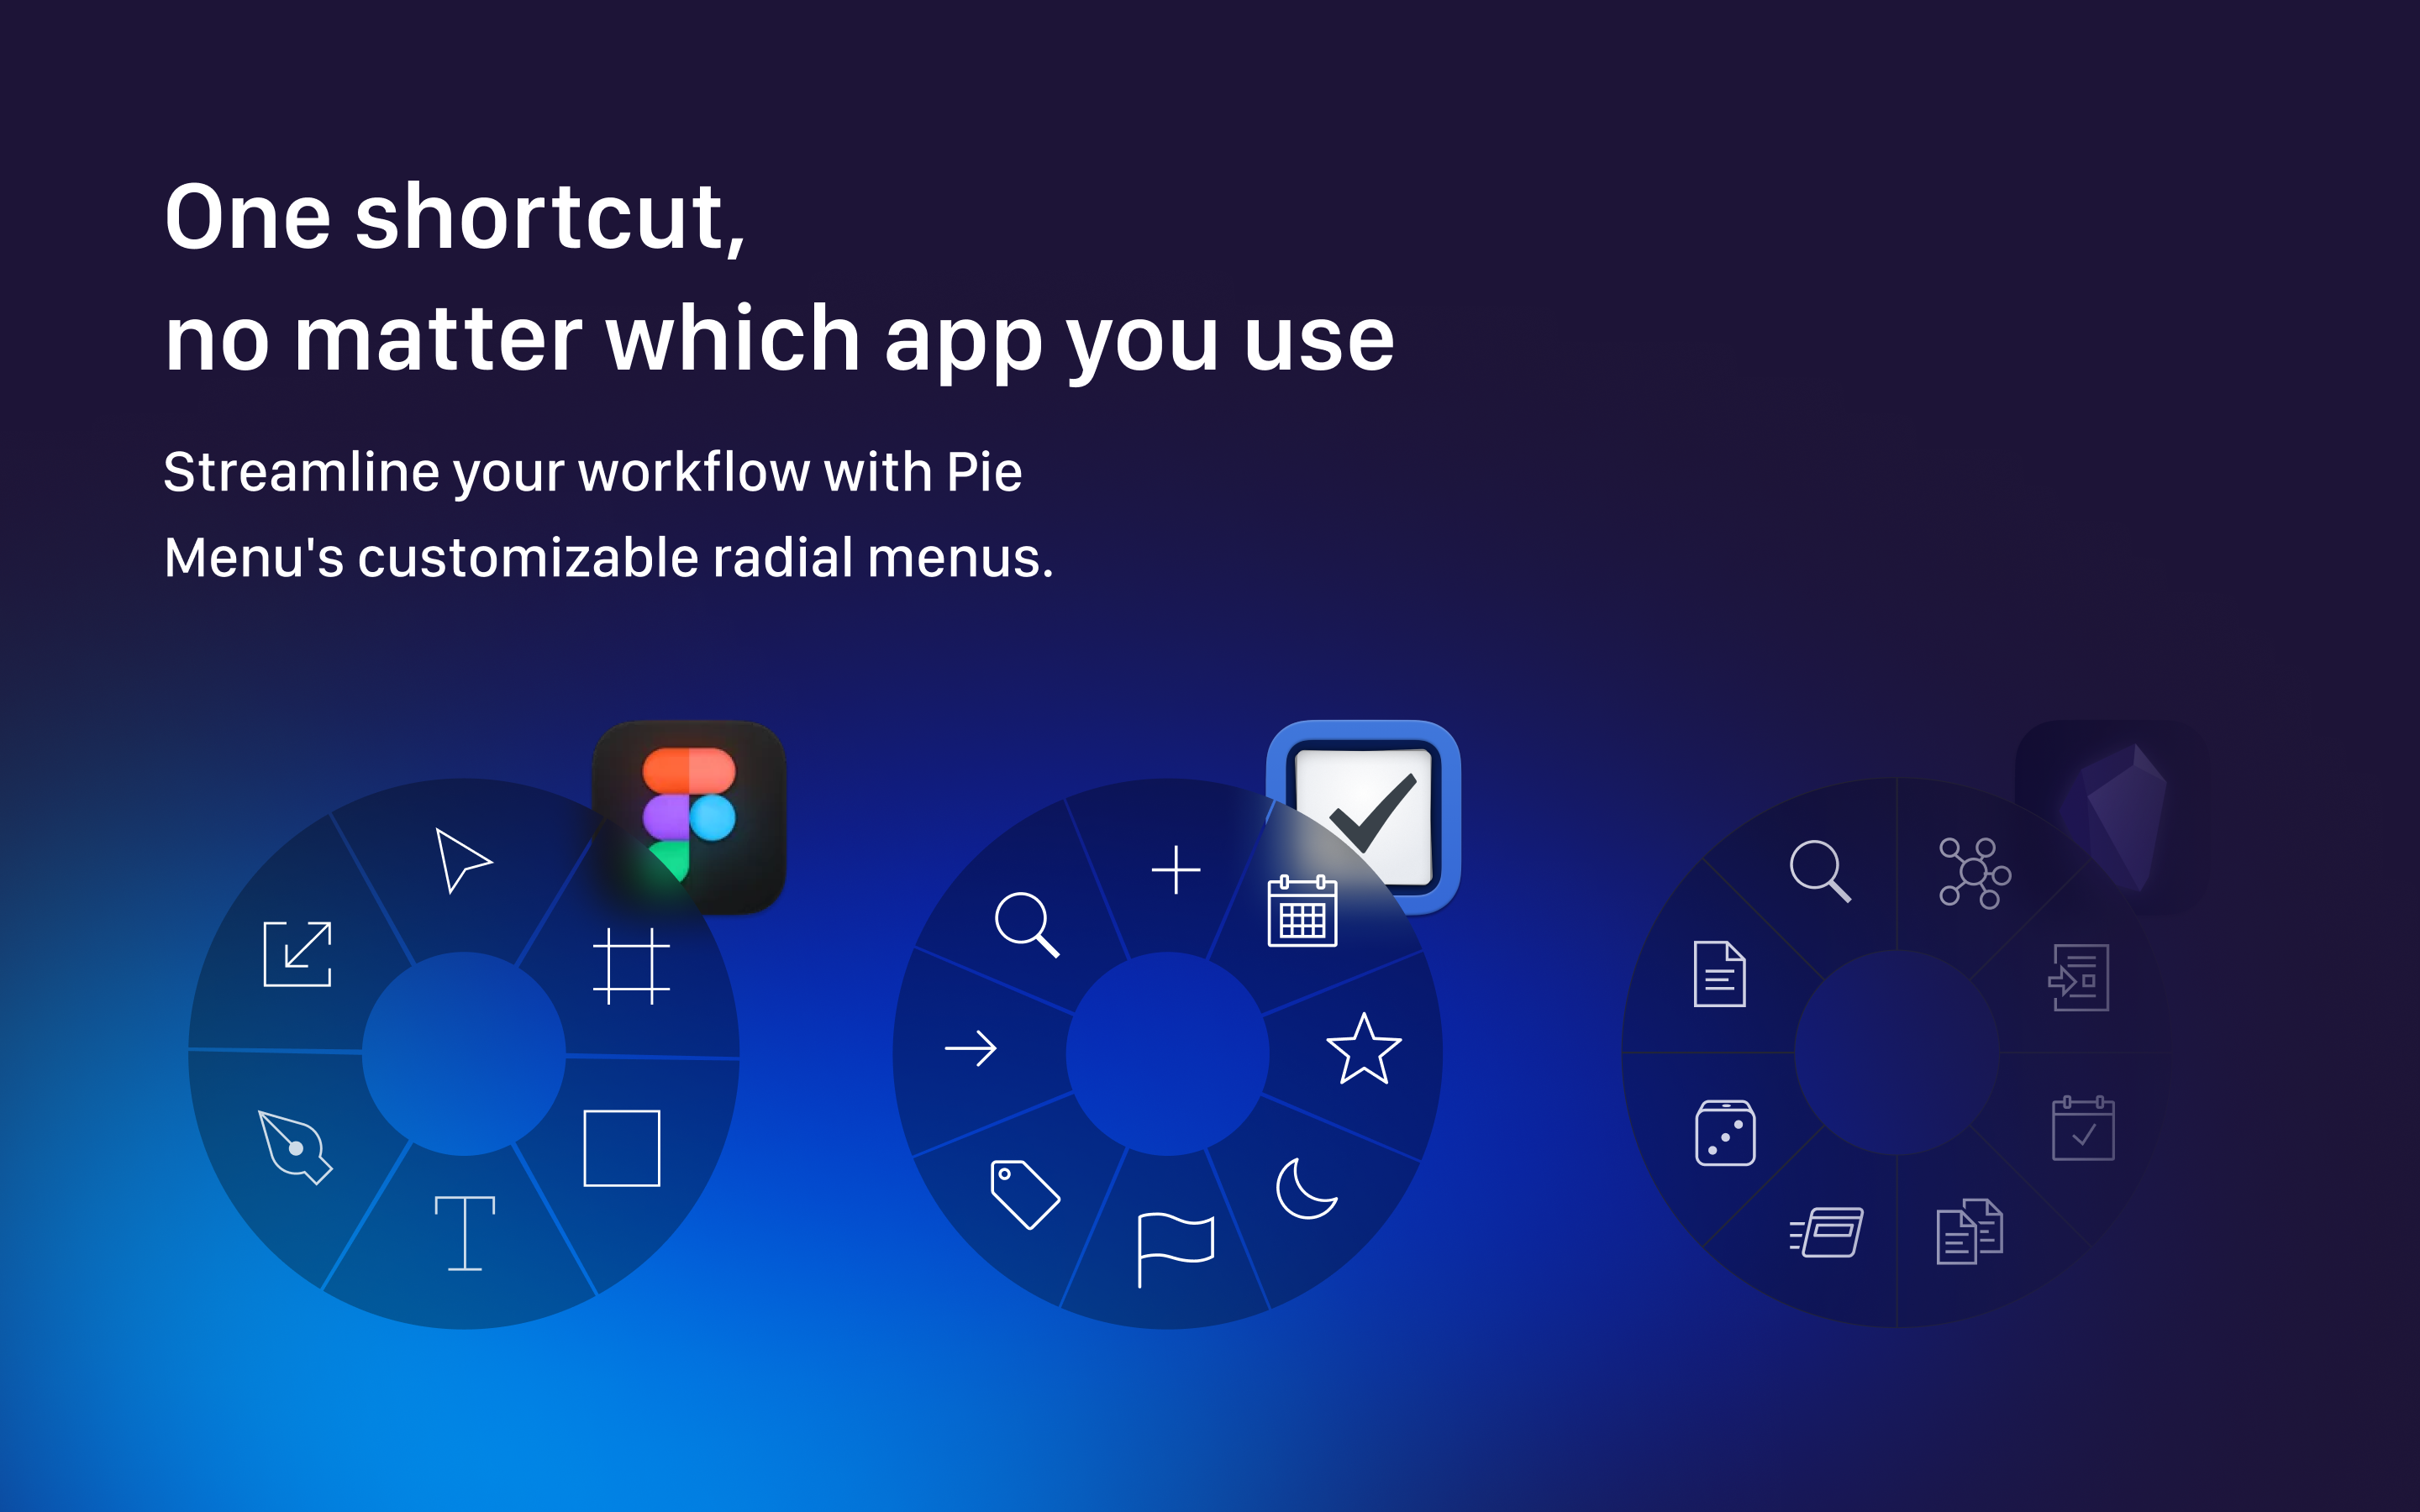 Pie Menu One shortcut - no matter which app you use